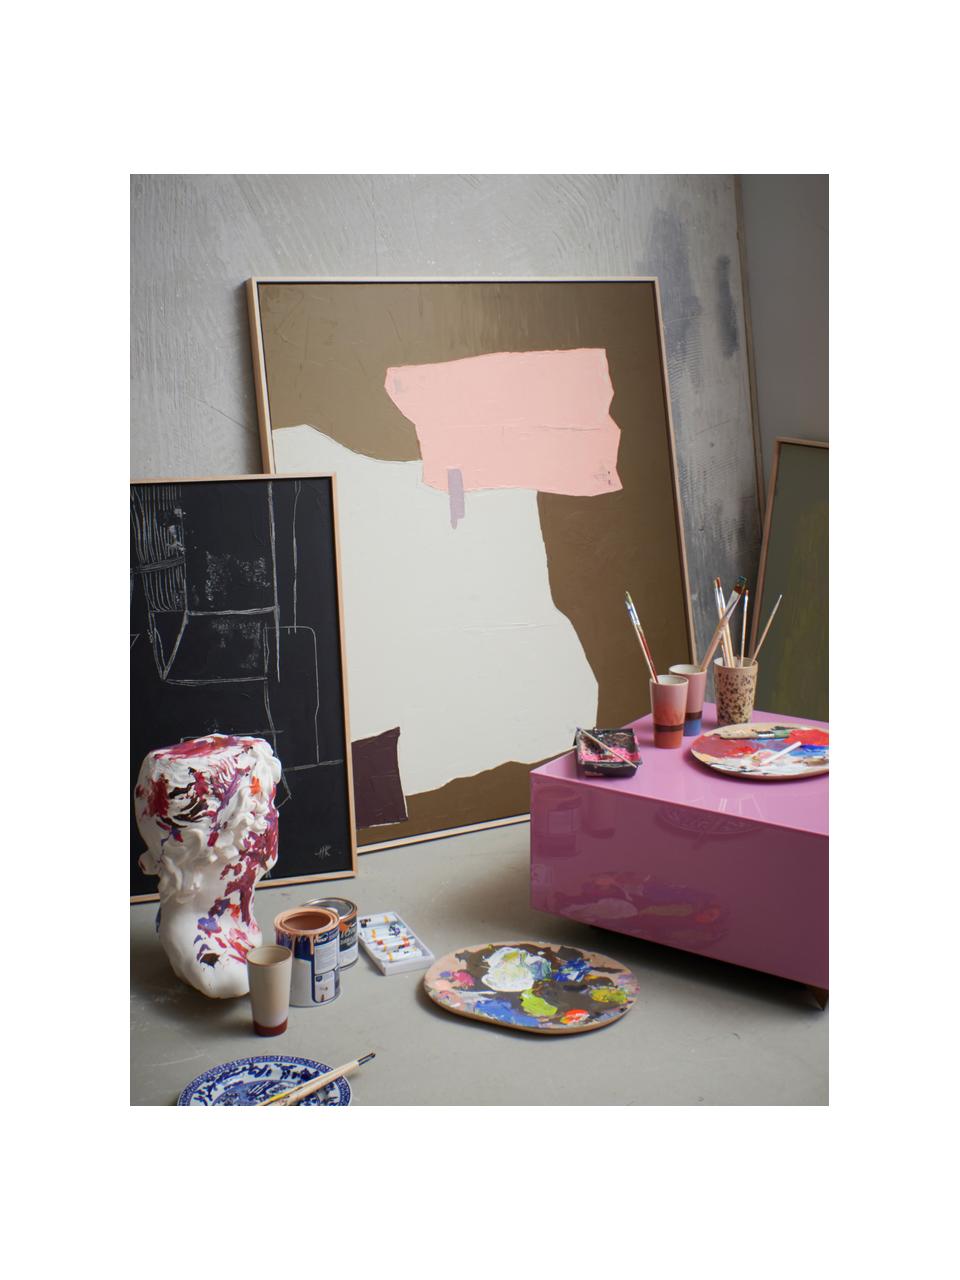 Gerahmtes Leinwandbild Olivia, Bild: Leinwand, Farbe, Rahmen: Eschenholz, Braun, Rosa, Cremefarben, B 100 x H 120 cm